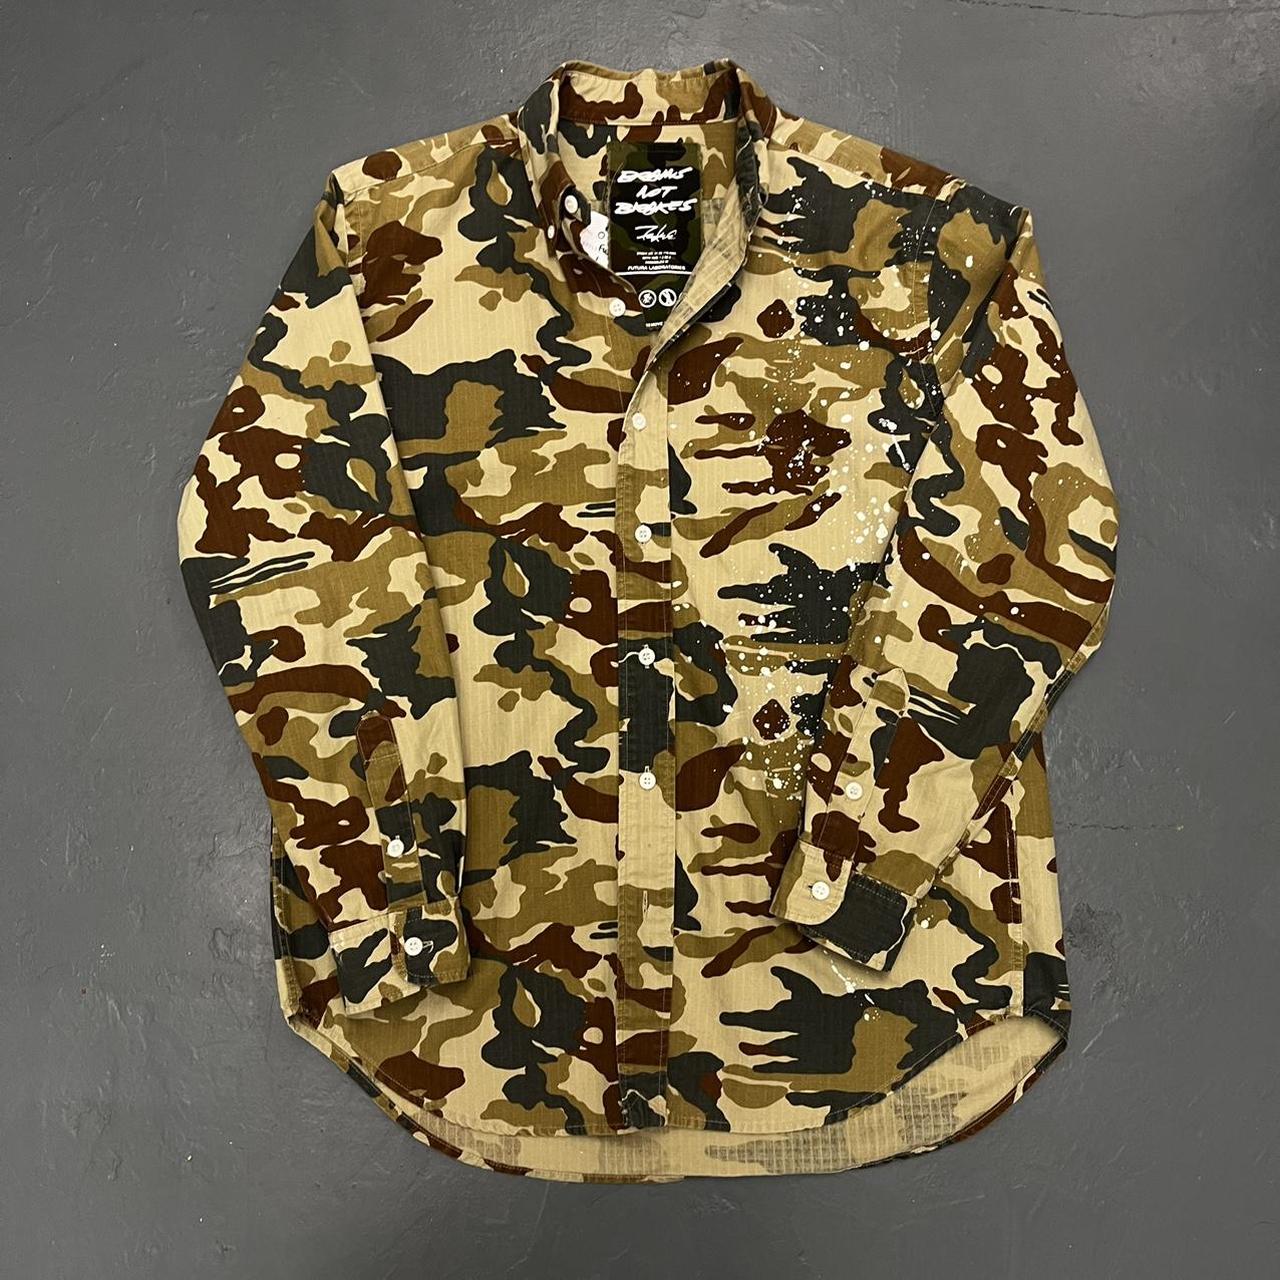 Futura Lab camouflage shirt in size medium, perfect... - Depop